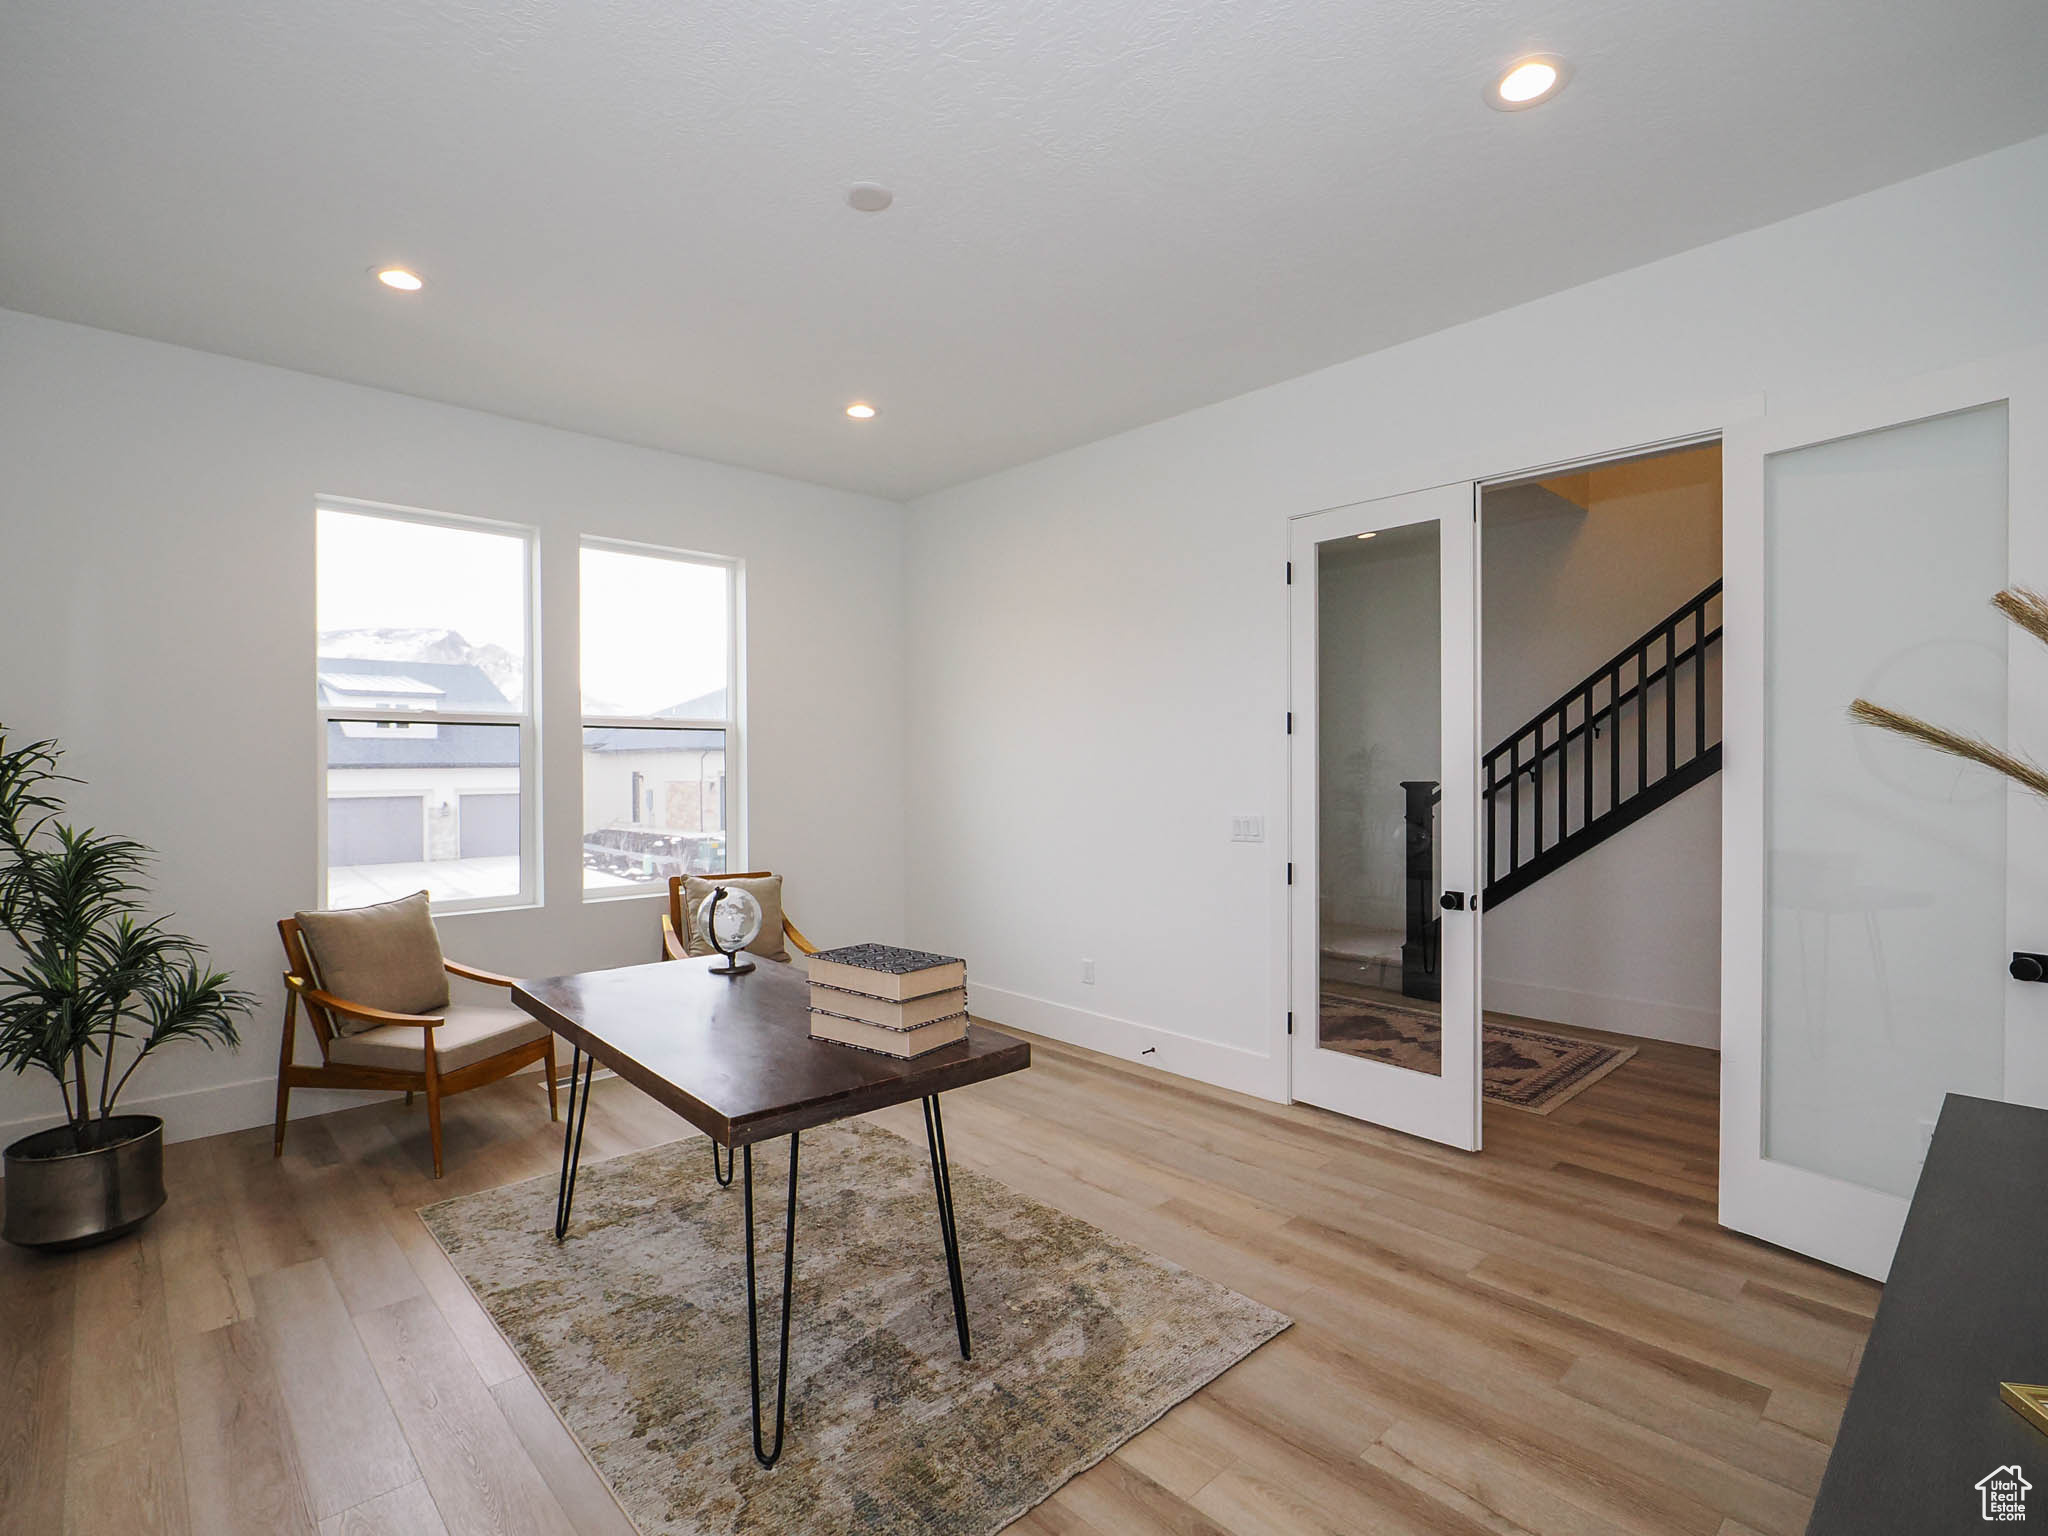 Sitting room with light hardwood / wood-style flooring